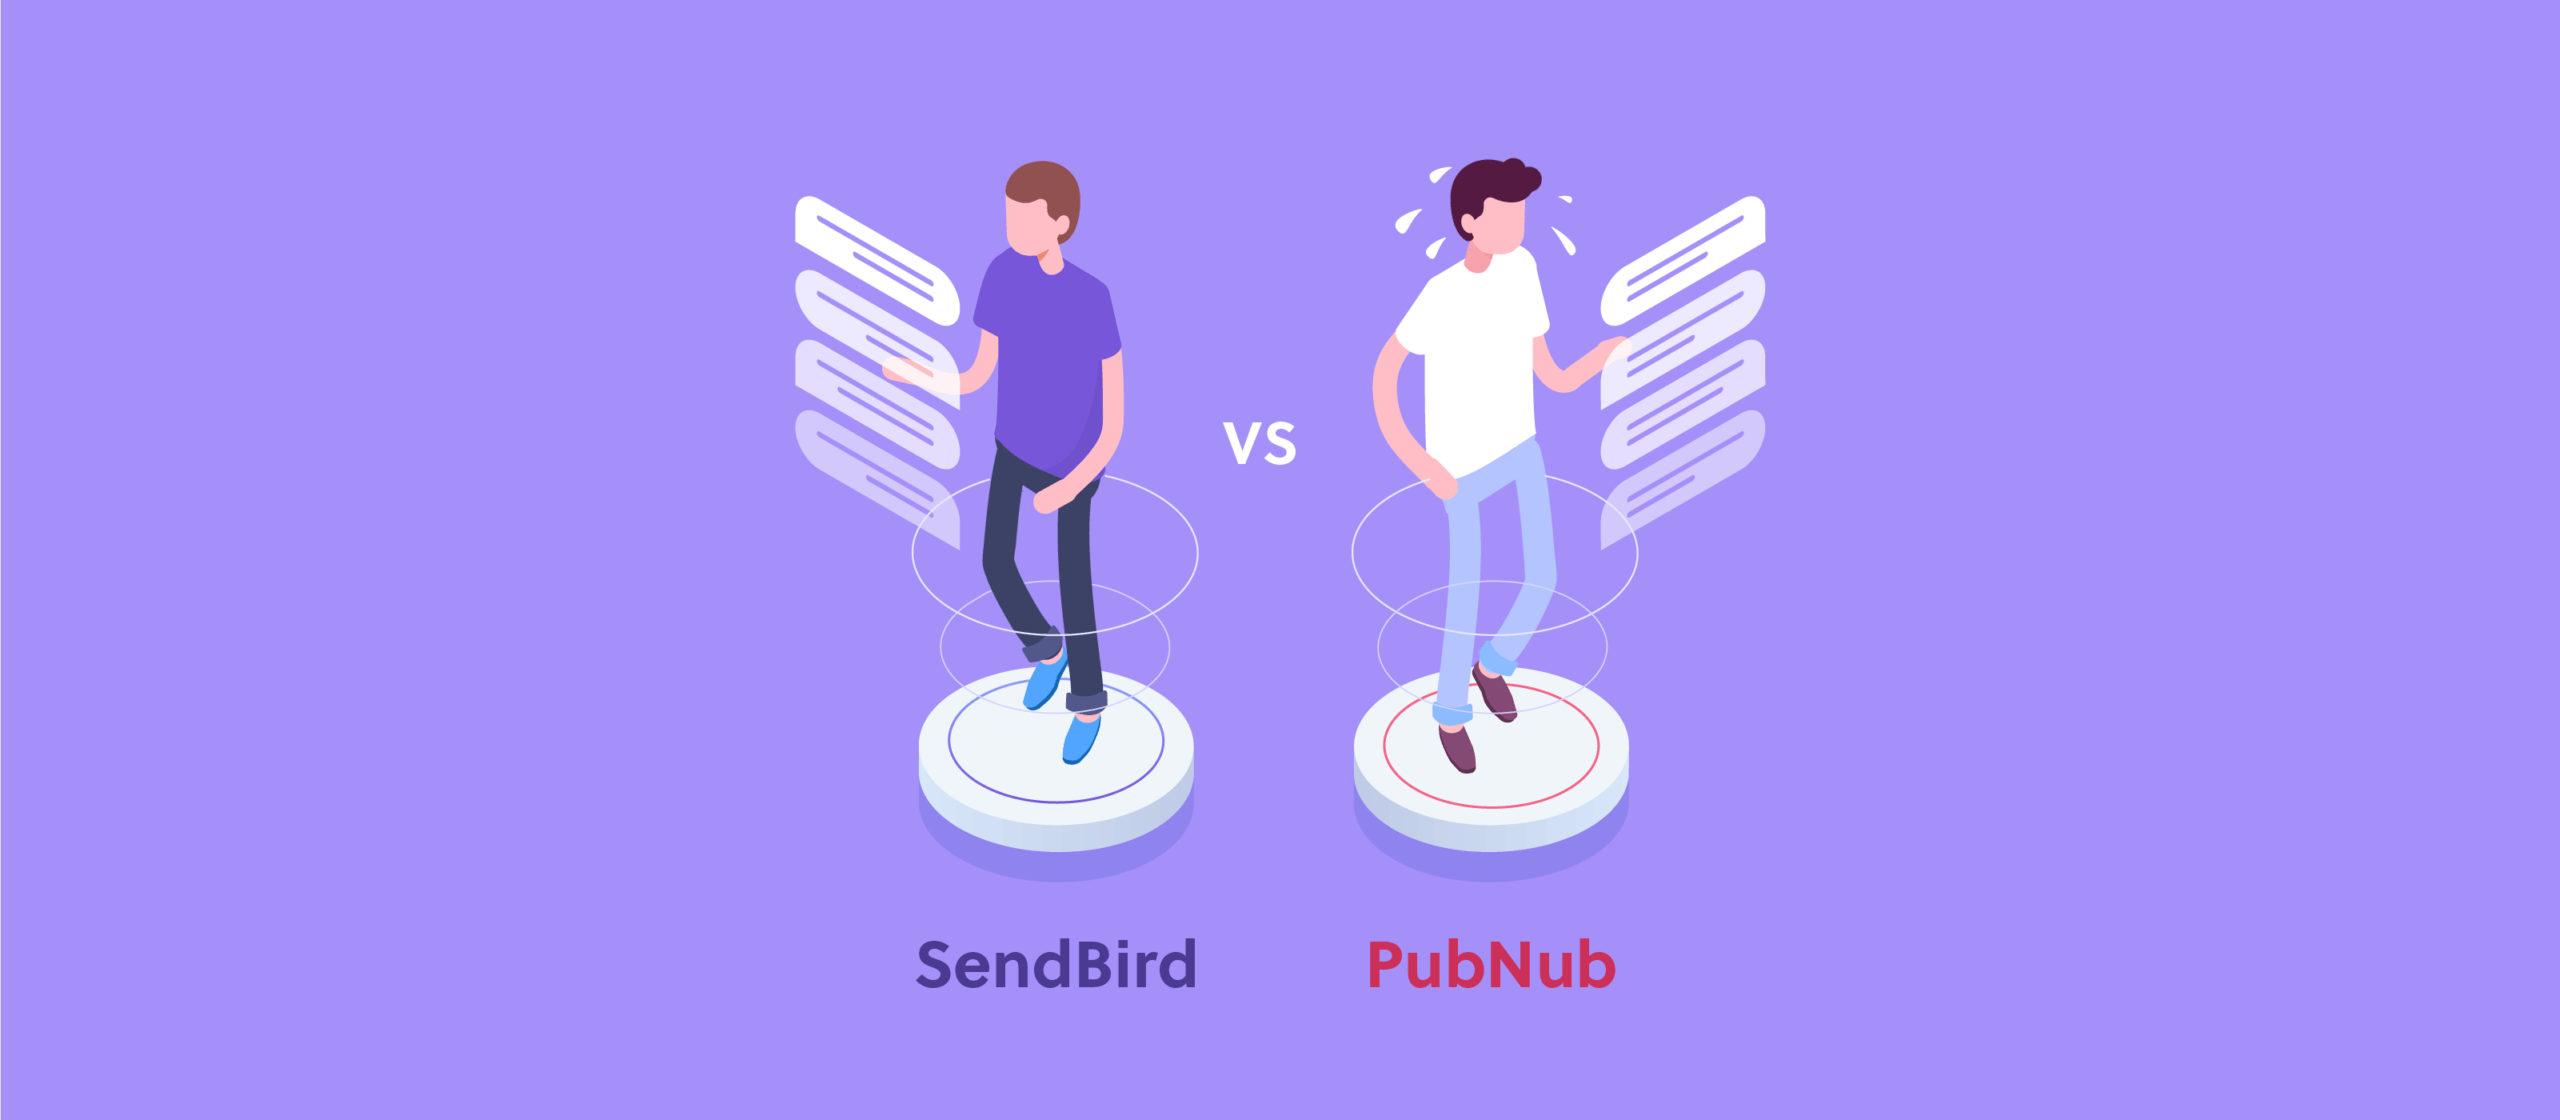 Sendbird vs pubnub blog cover